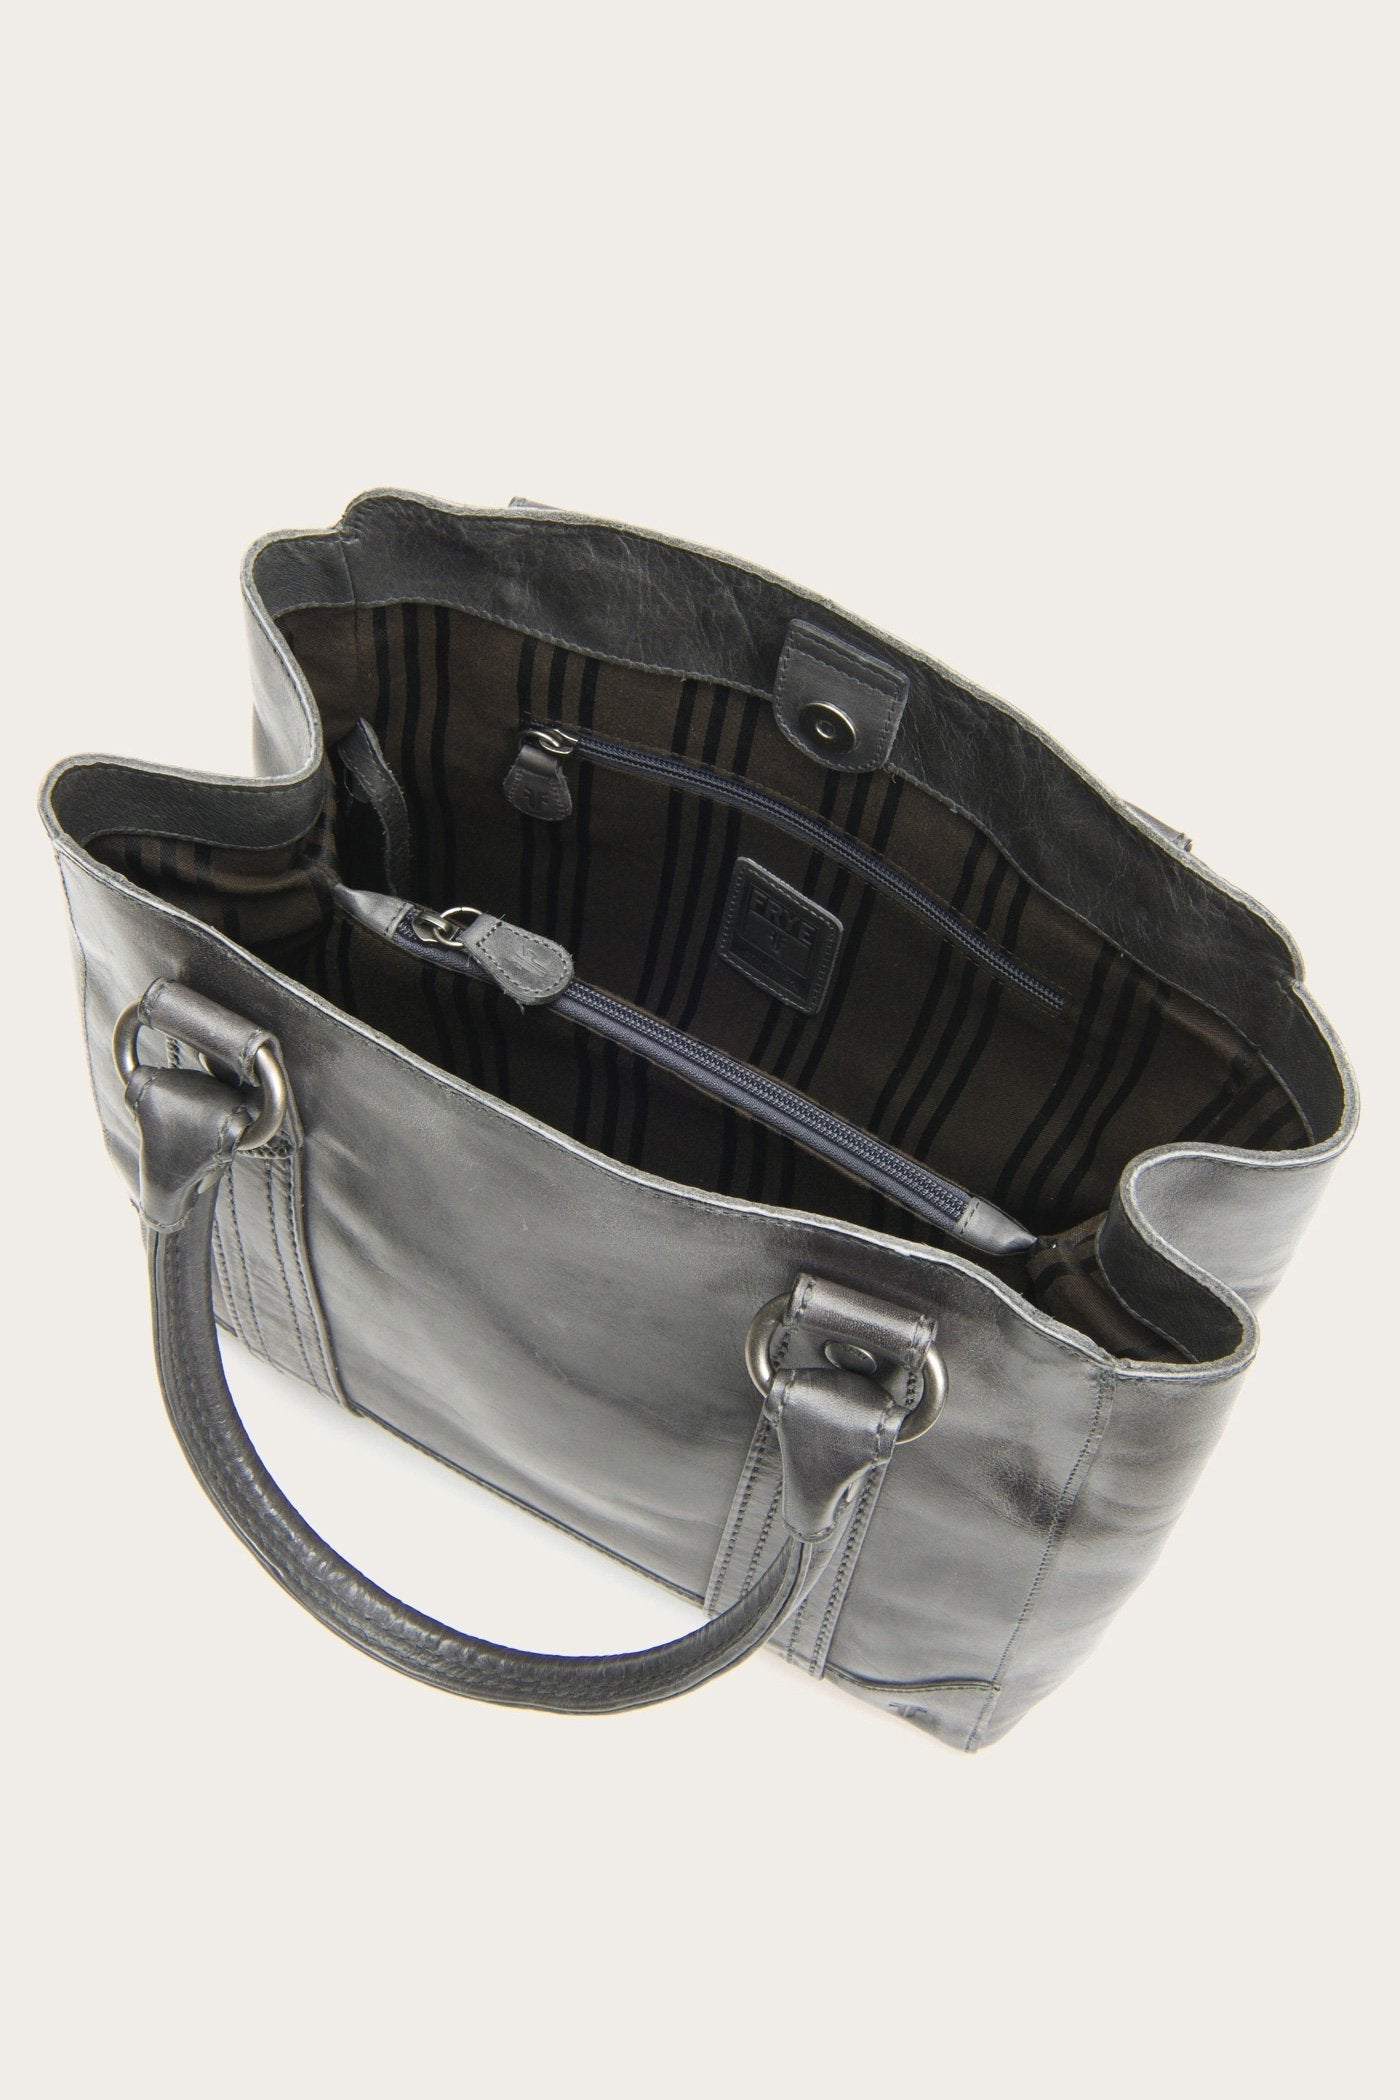 Frye Genuine Leather Handbags | Mercari